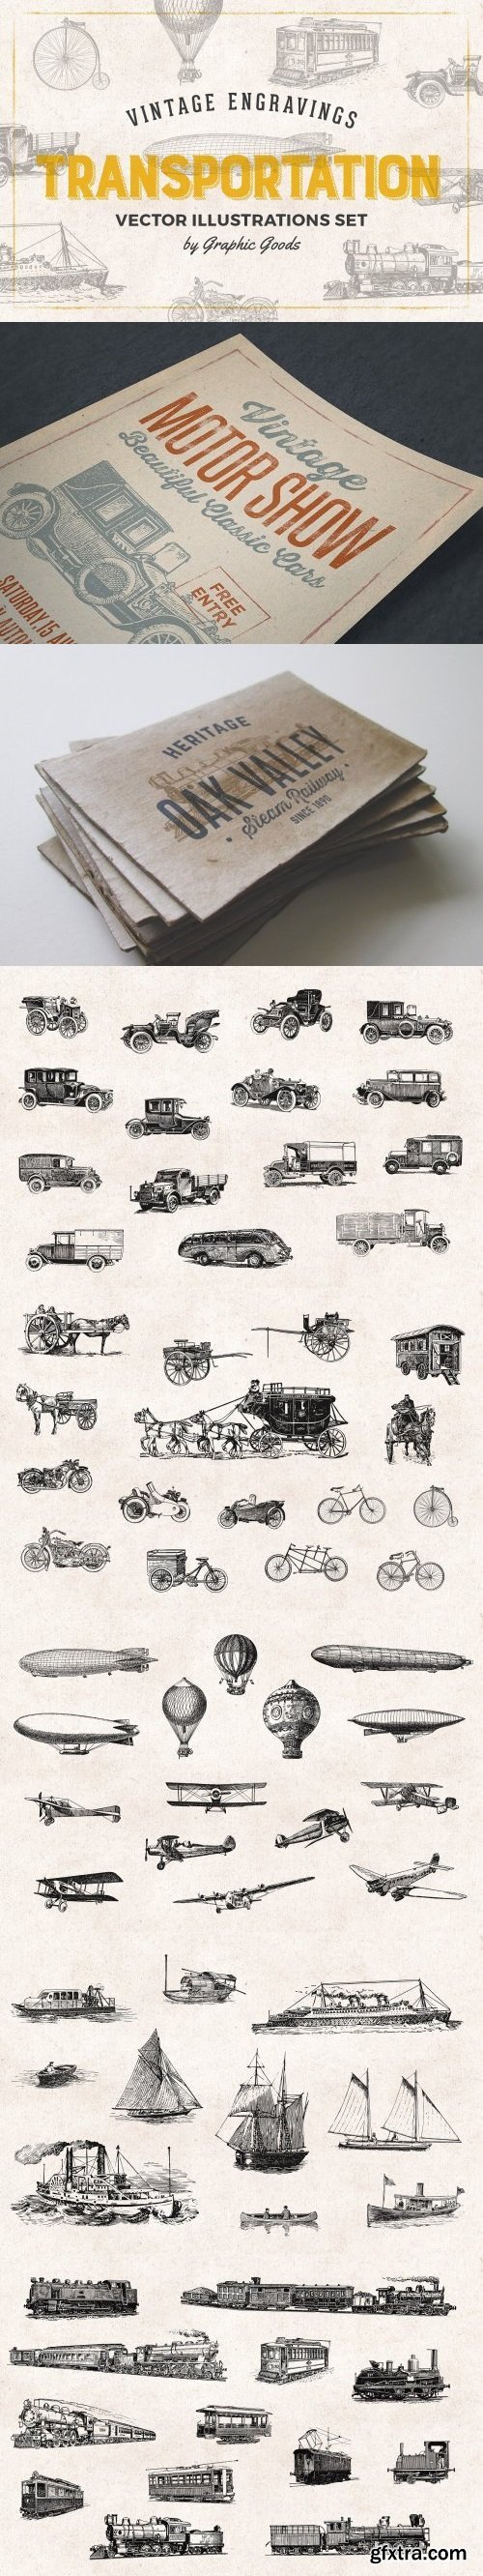 CM - Transportation Engravings Set 684871